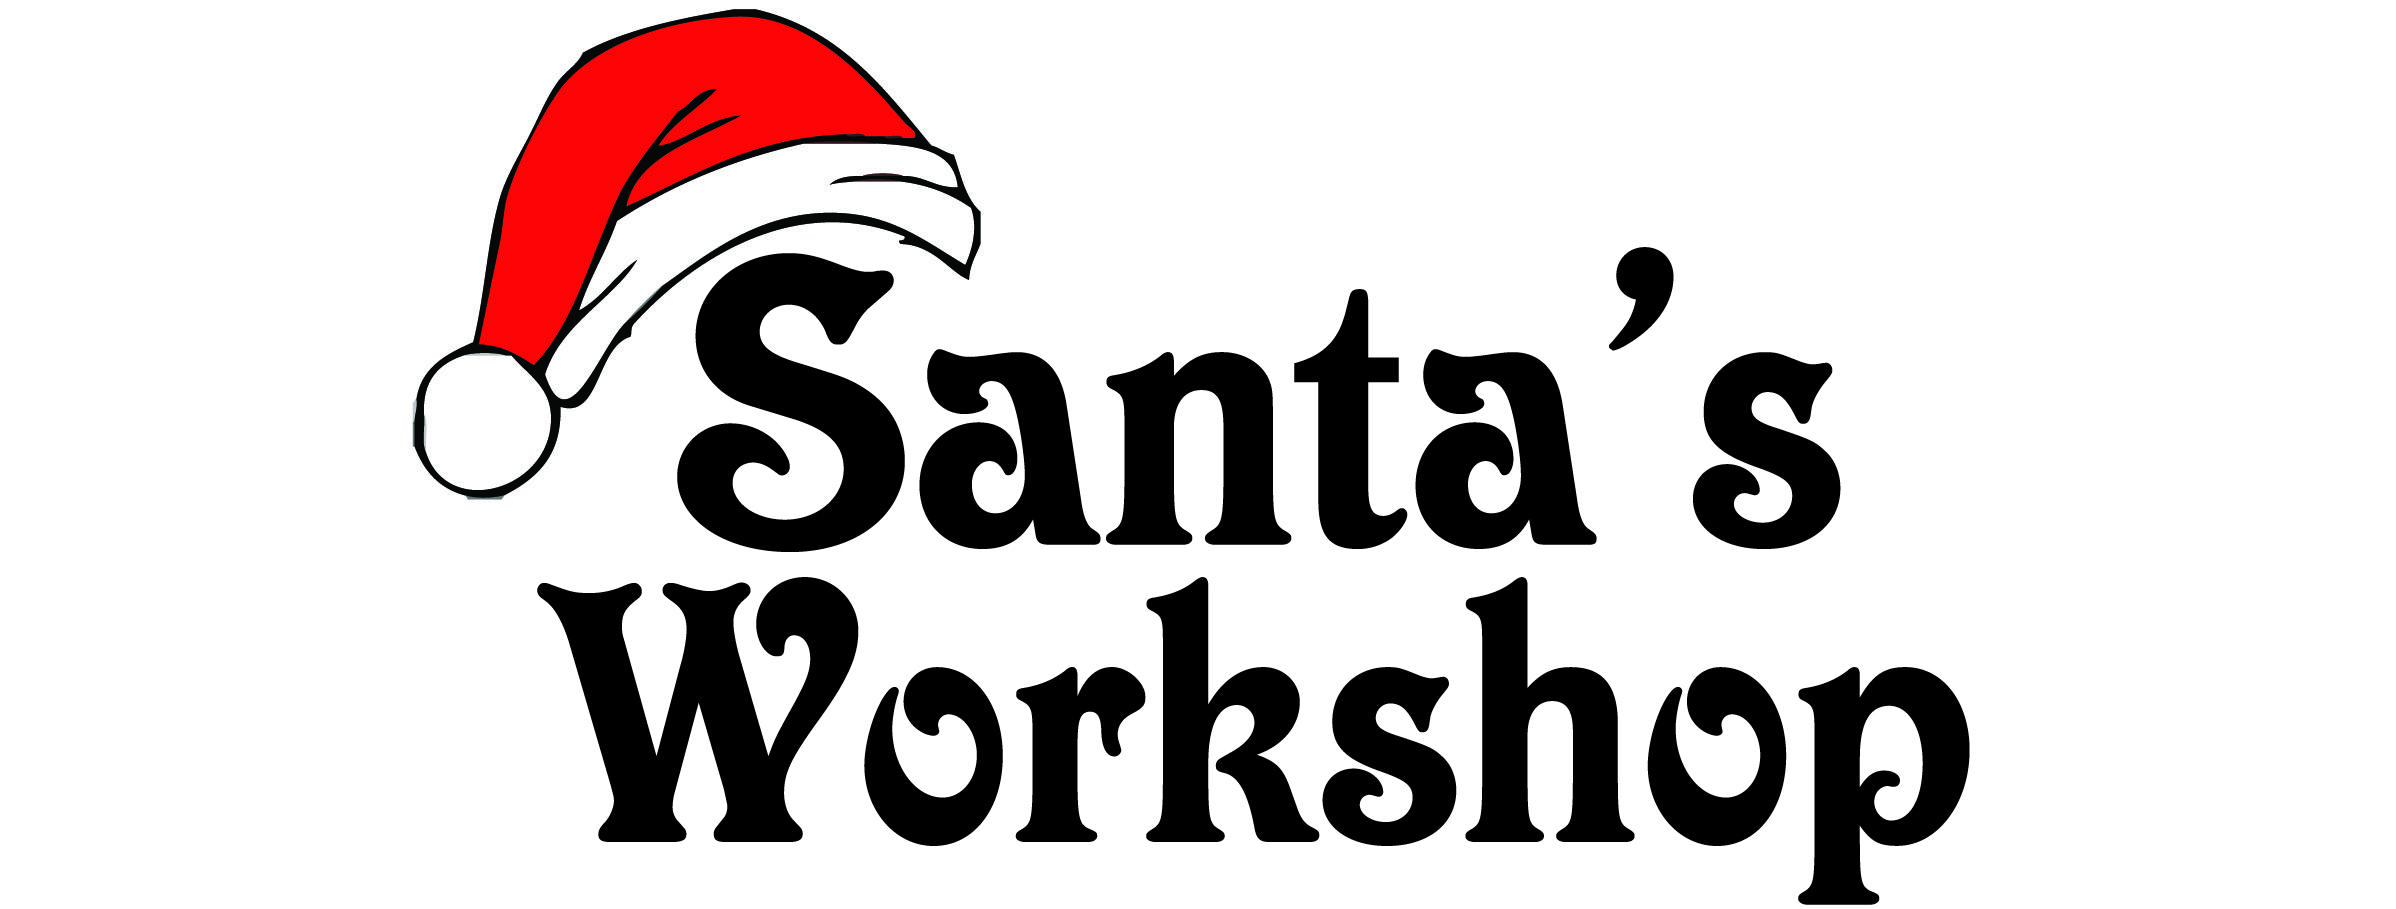 Free Santa Workshop Clipart, Download Free Clip Art, Free Clip Art